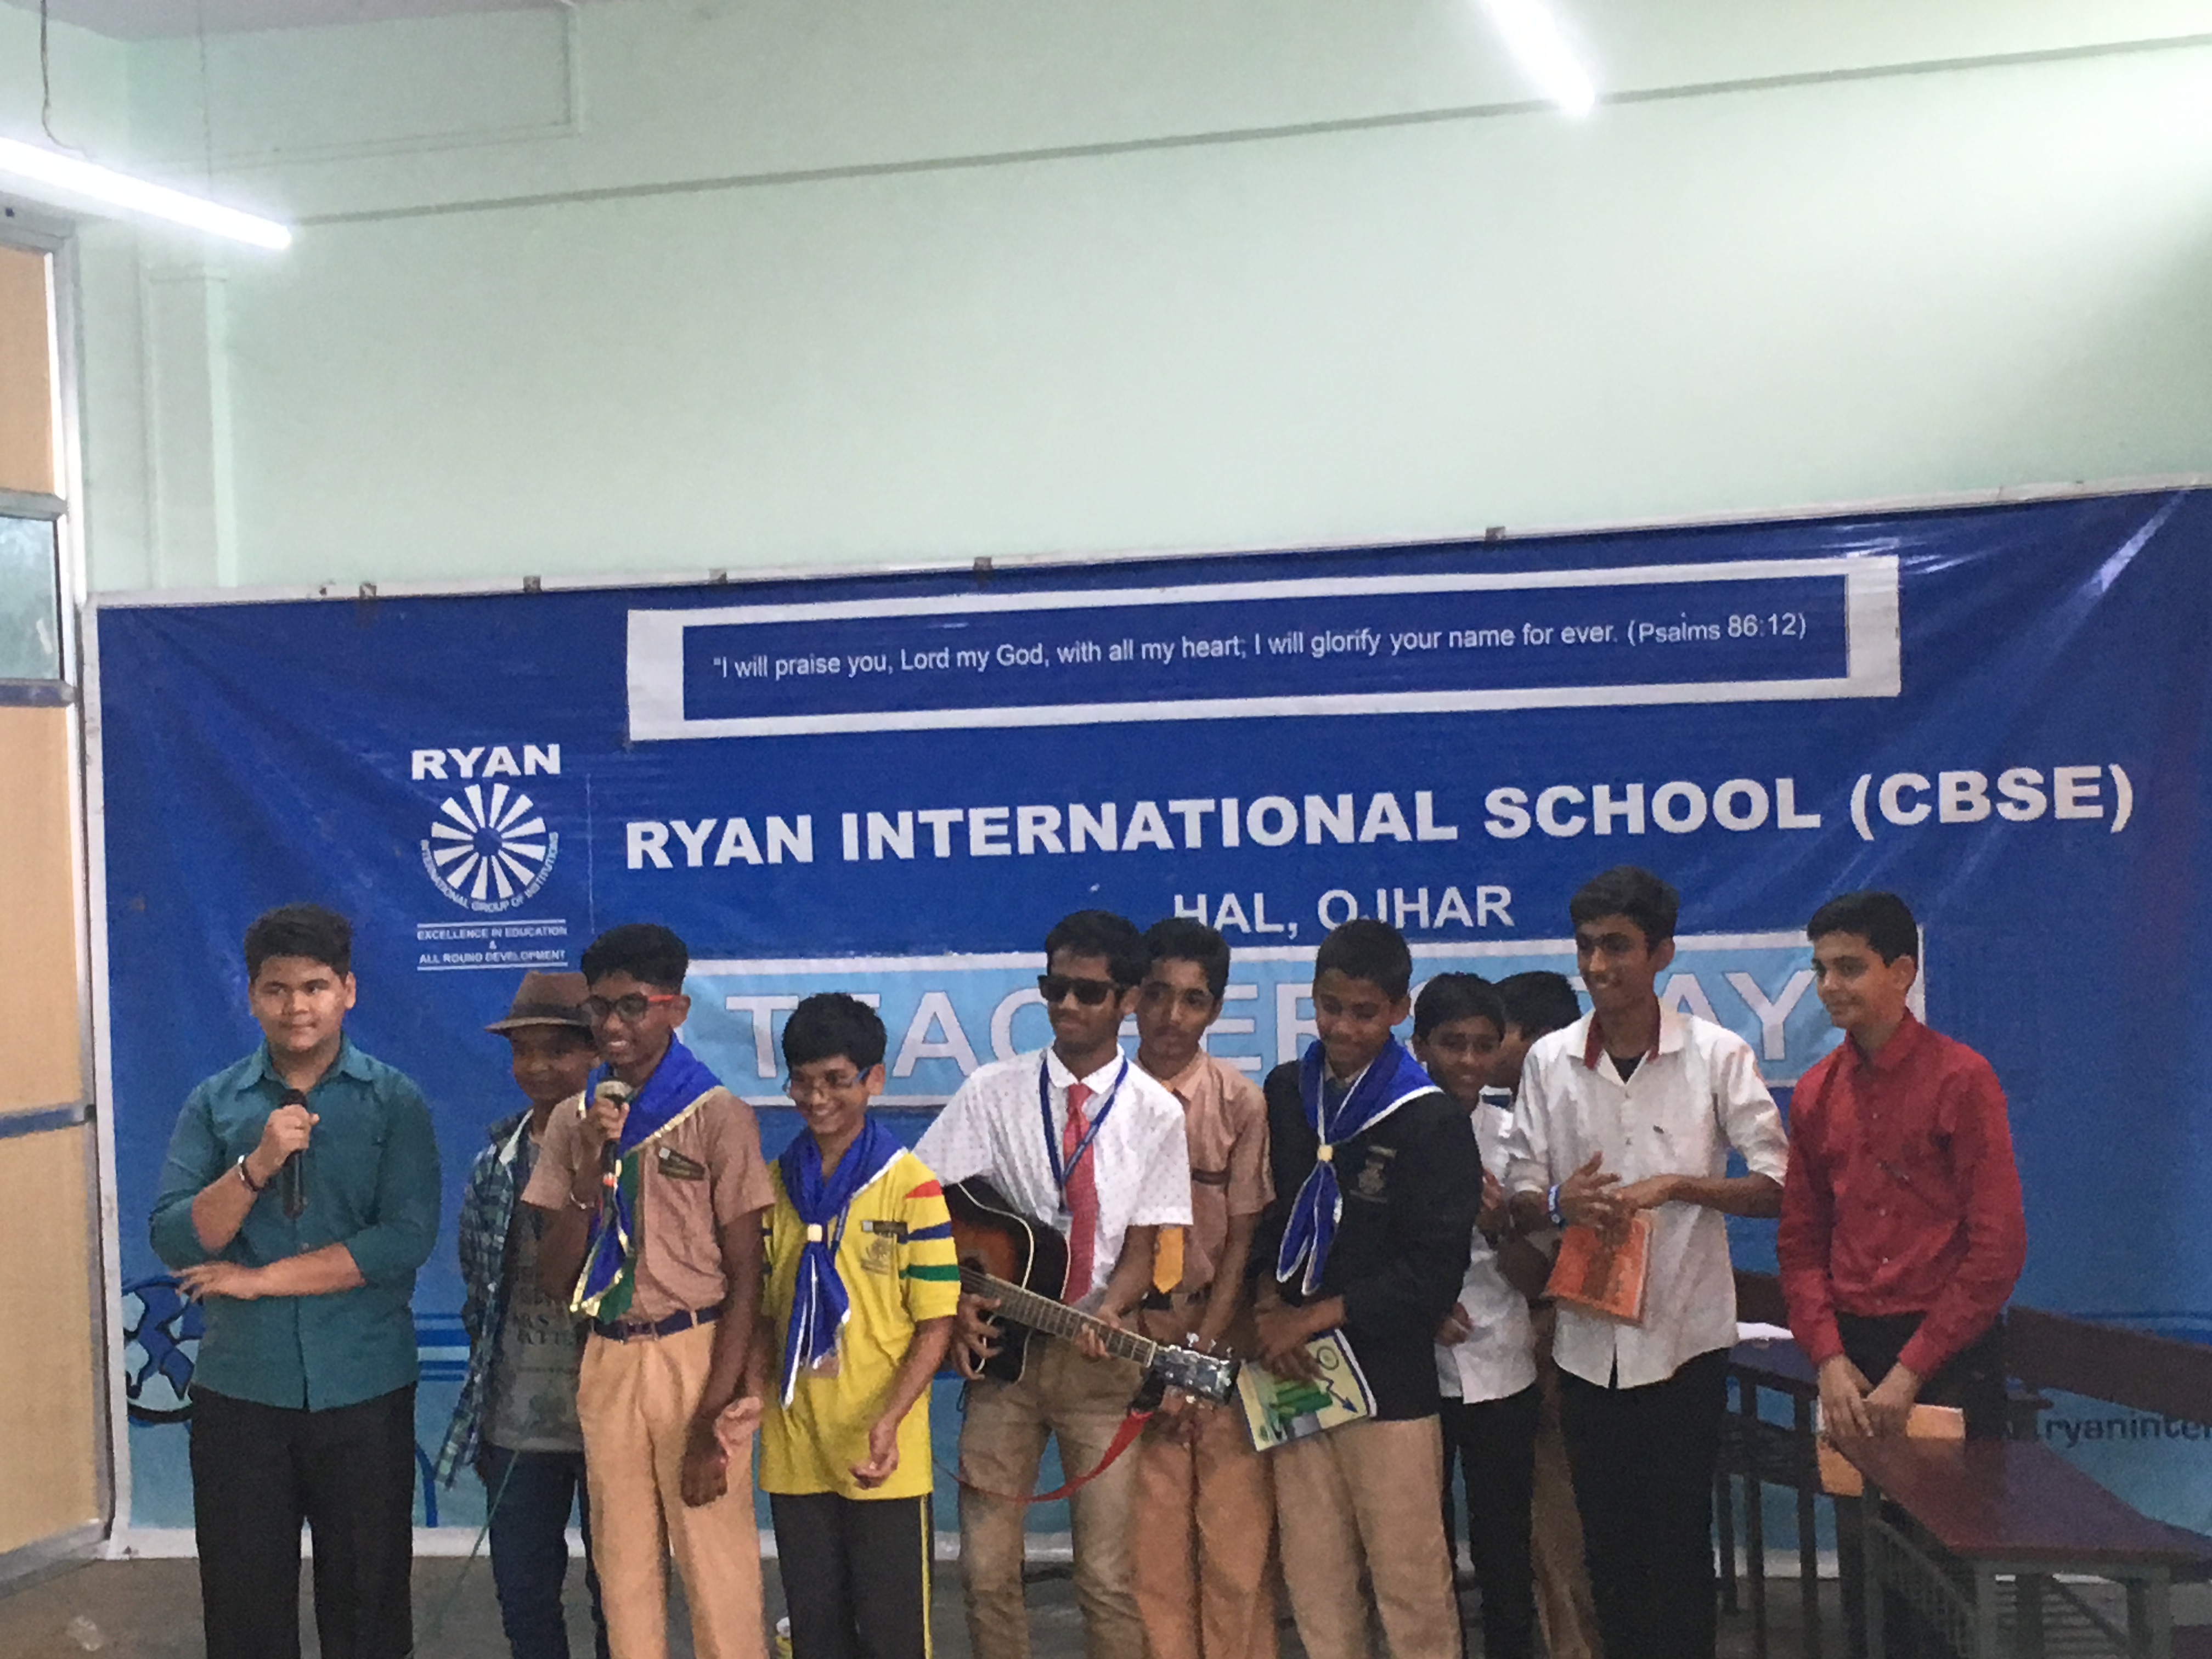 Teacher’s Day - Ryan International School, Hal Ojhar